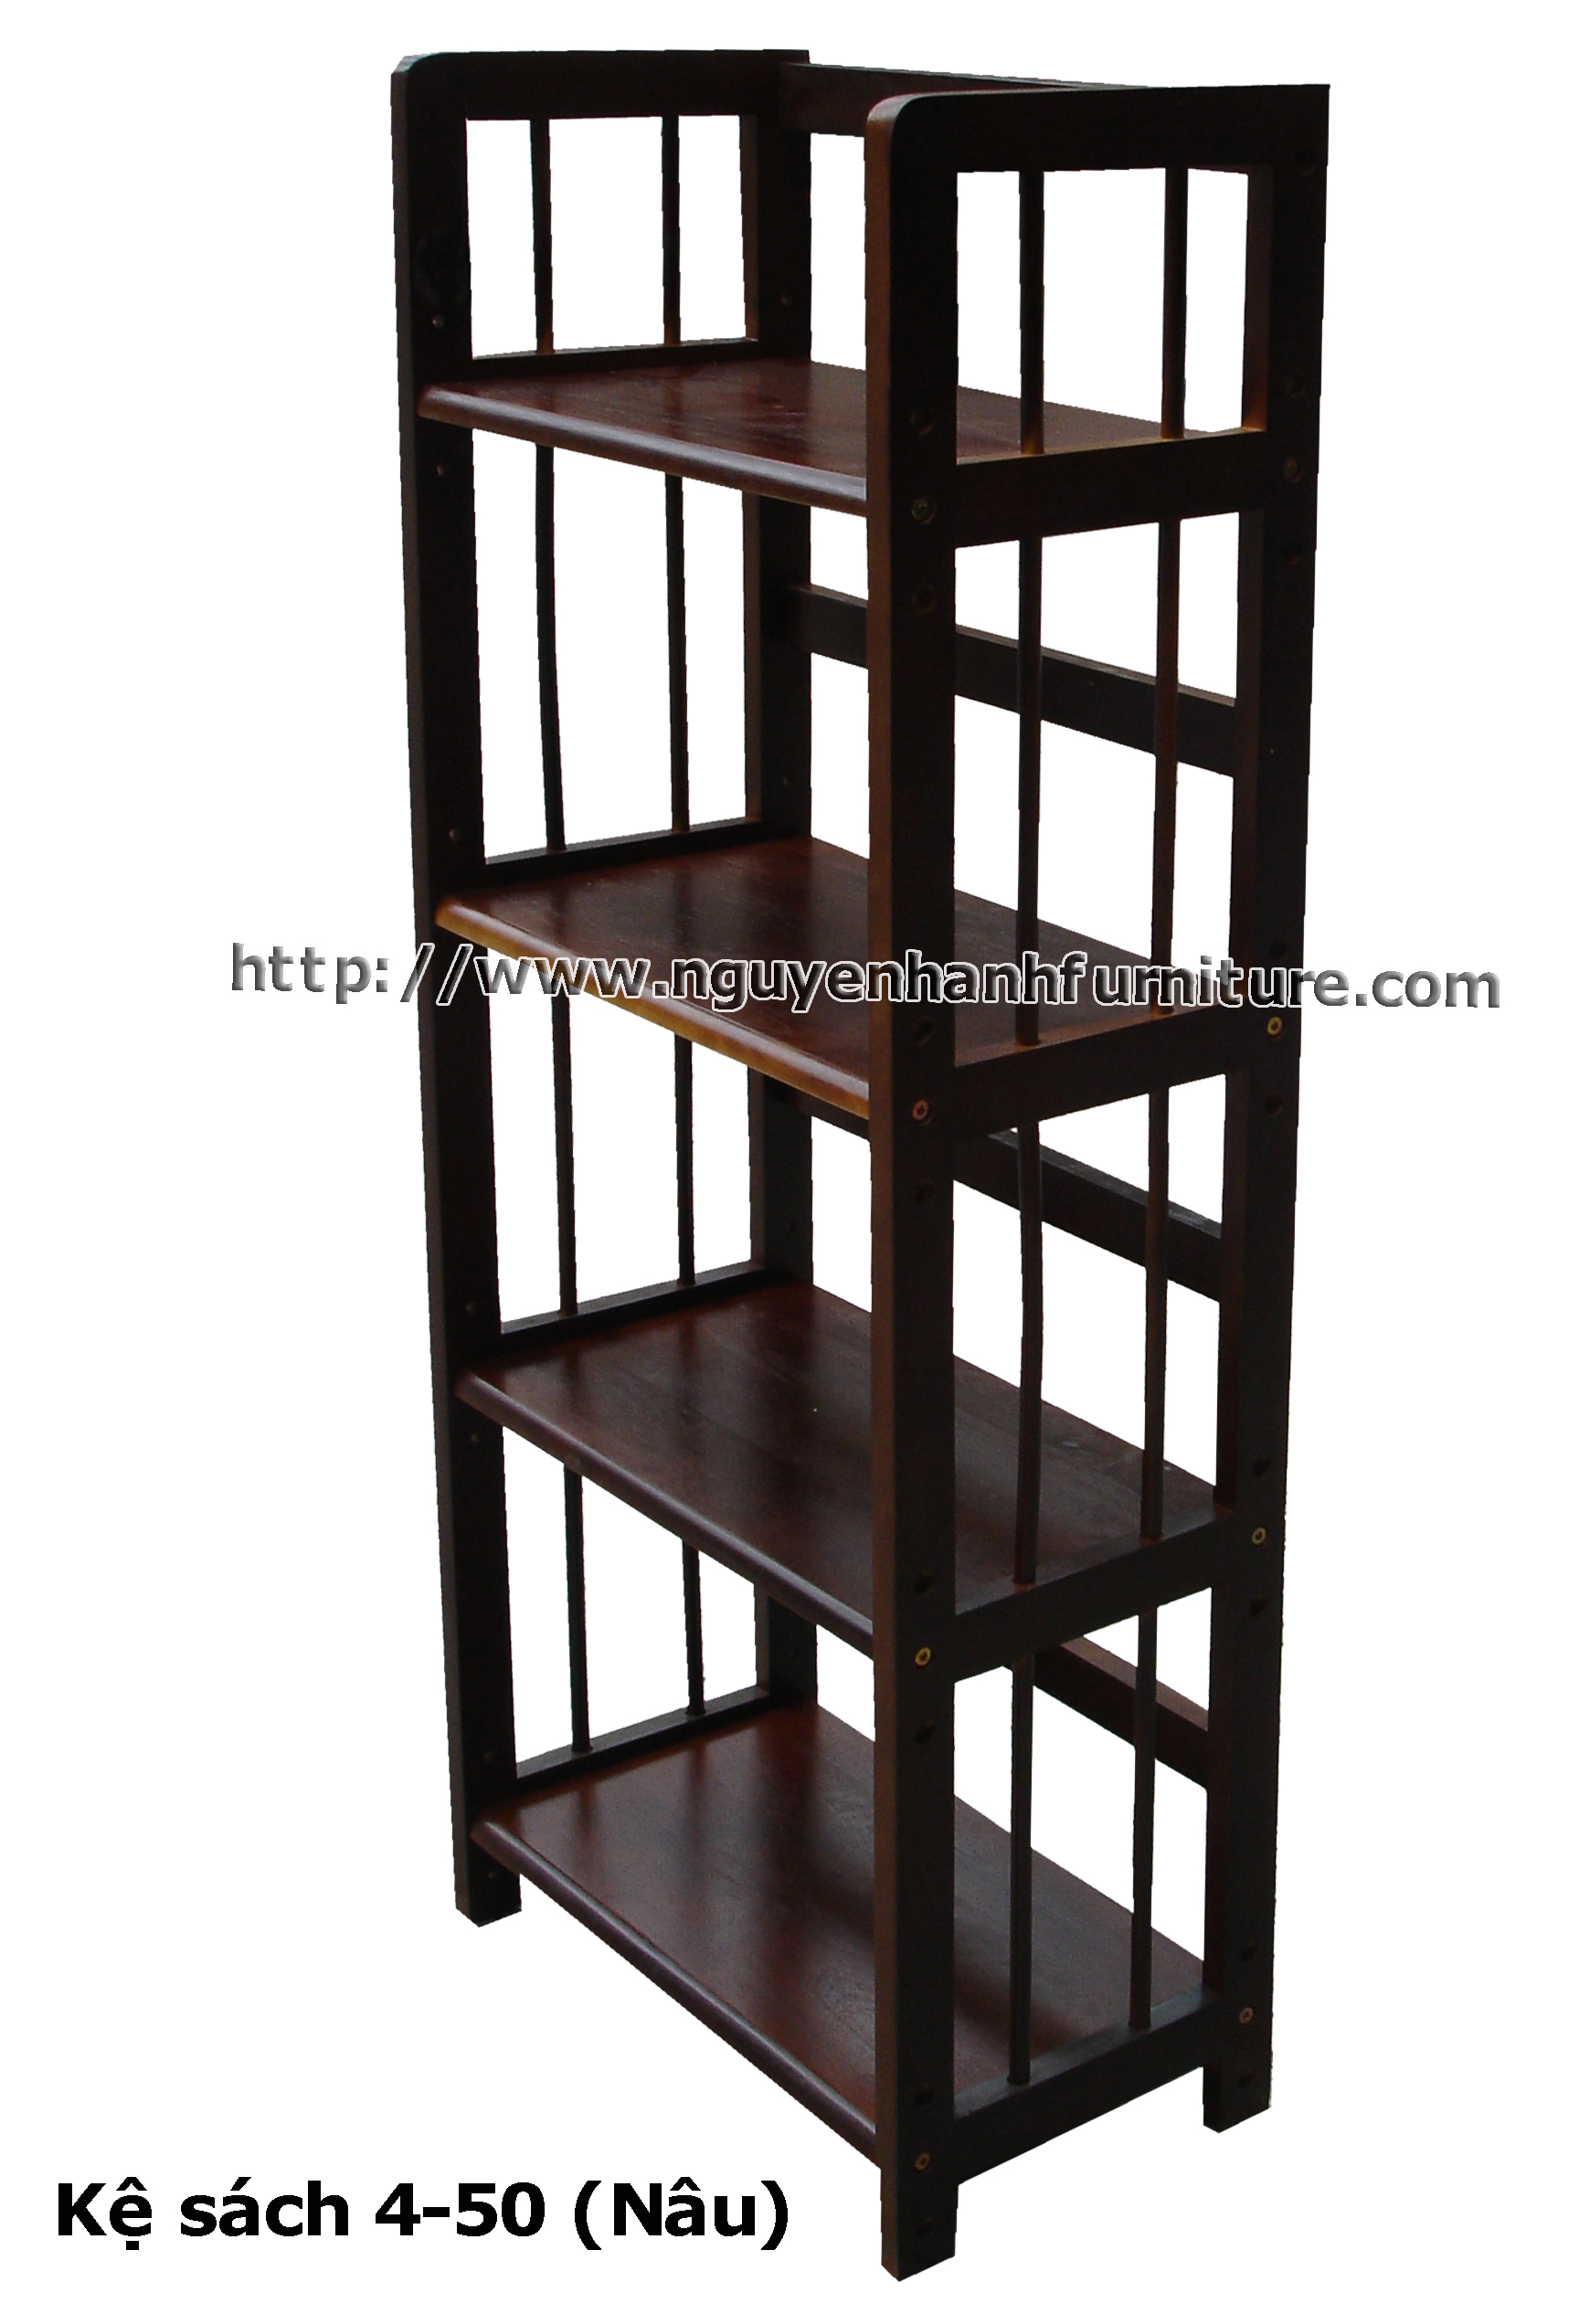 Name product: 4 storey Adjustable Bookshelf 50 (Brown) - Dimensions: 50 x 28 x 120 (H) - Description: Wood natural rubber